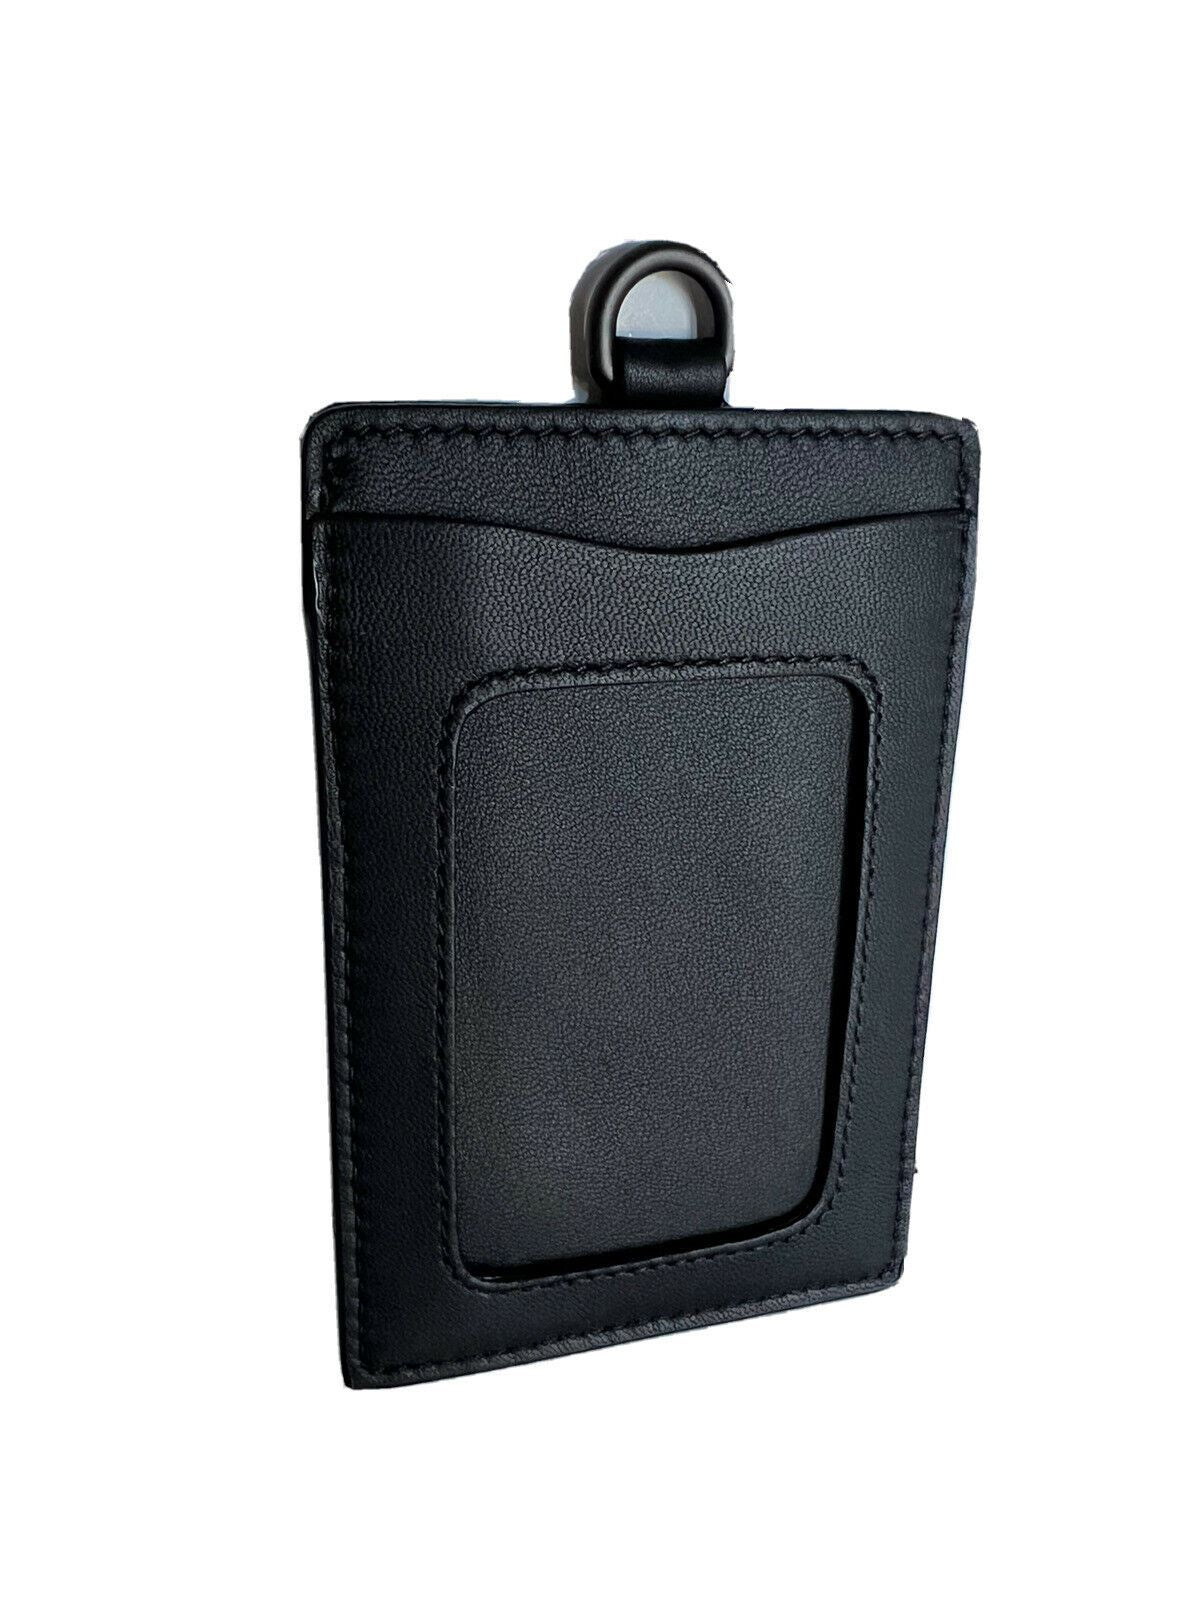 NWT $250 Bottega Veneta Leather Intrecciato Card Case Black 415855 Italy